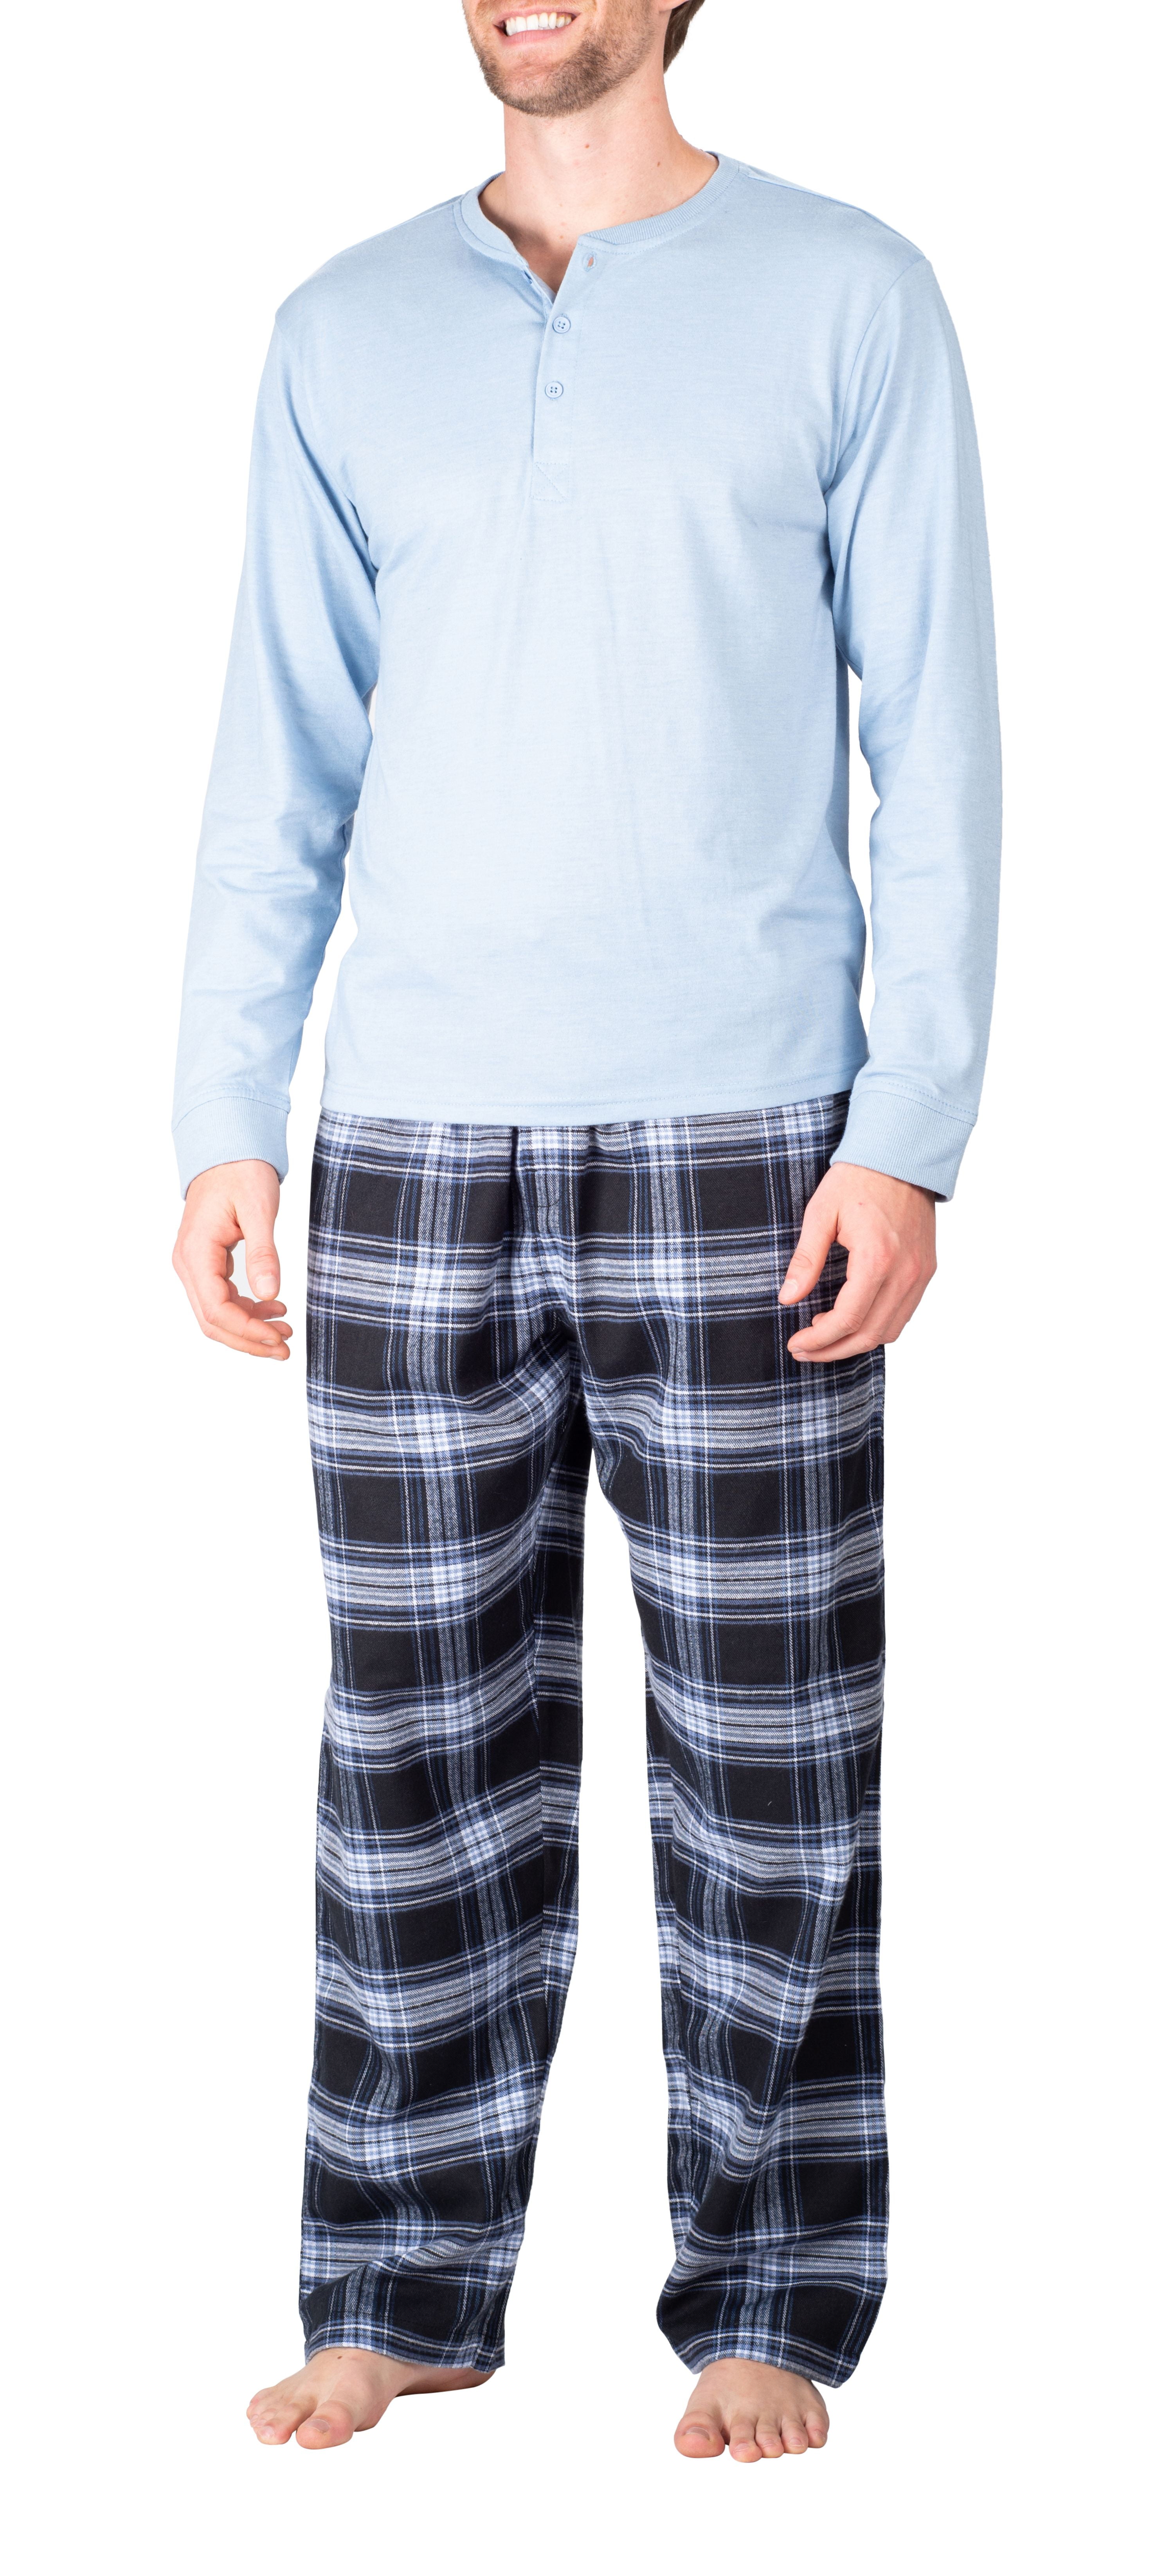 Mens Pyjama Set/Bottom Cotton Nightwear Long Sleeves Top with Long Bottom Pants Soft and Breathable Sleepwear